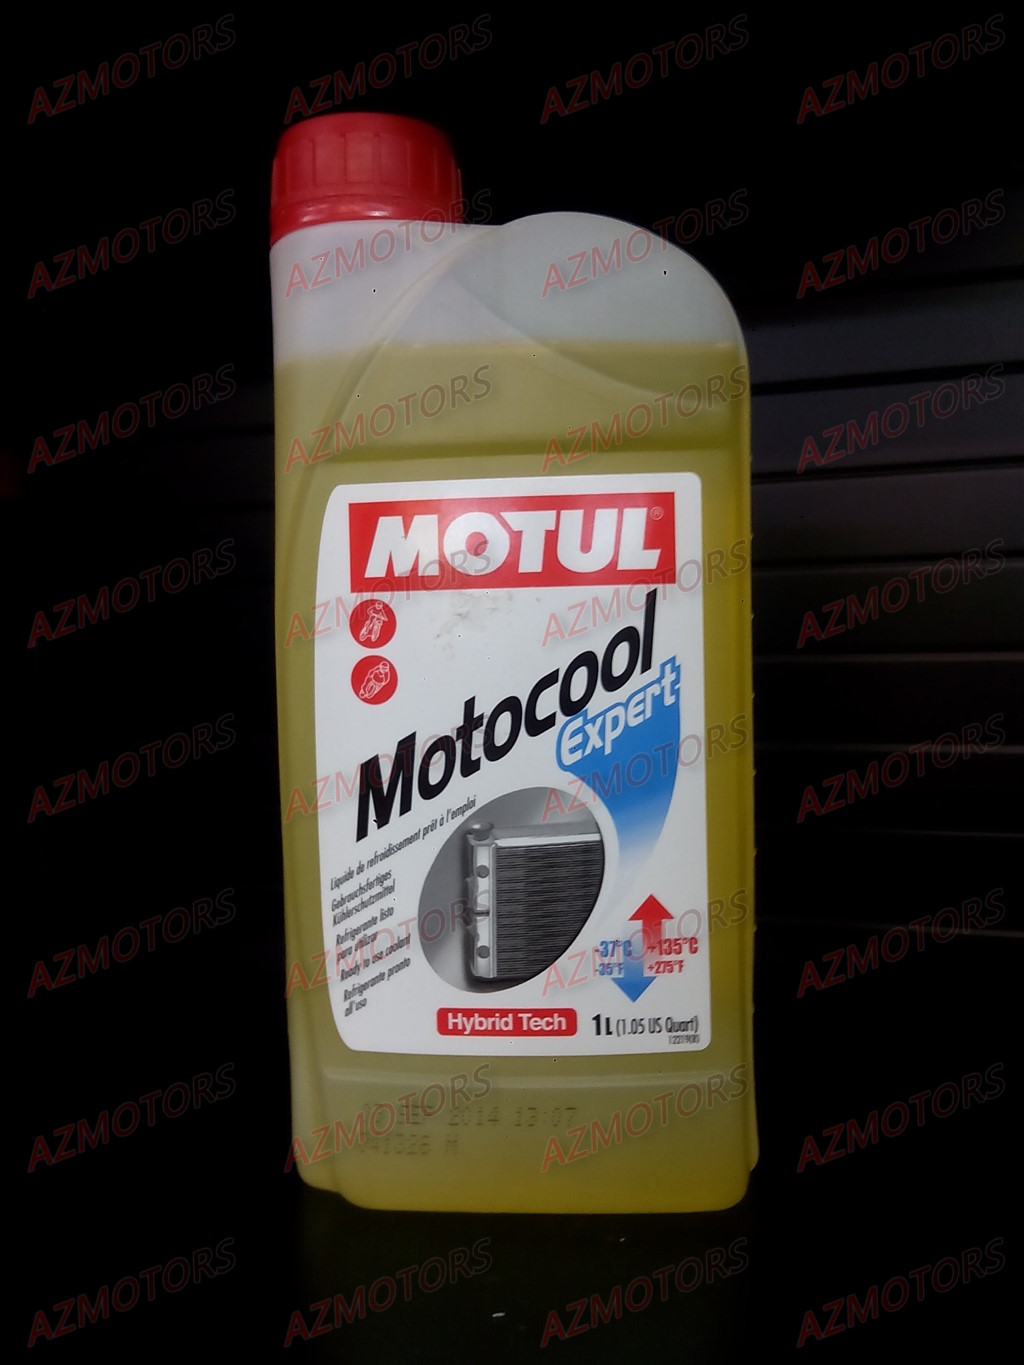 RADIATEUR MOTOCOOL 1L Liquides de Refroidissement 101087 - MOTUL MOTOCOOL EXPERT HYBRID TECH - 1L origine MOTUL 